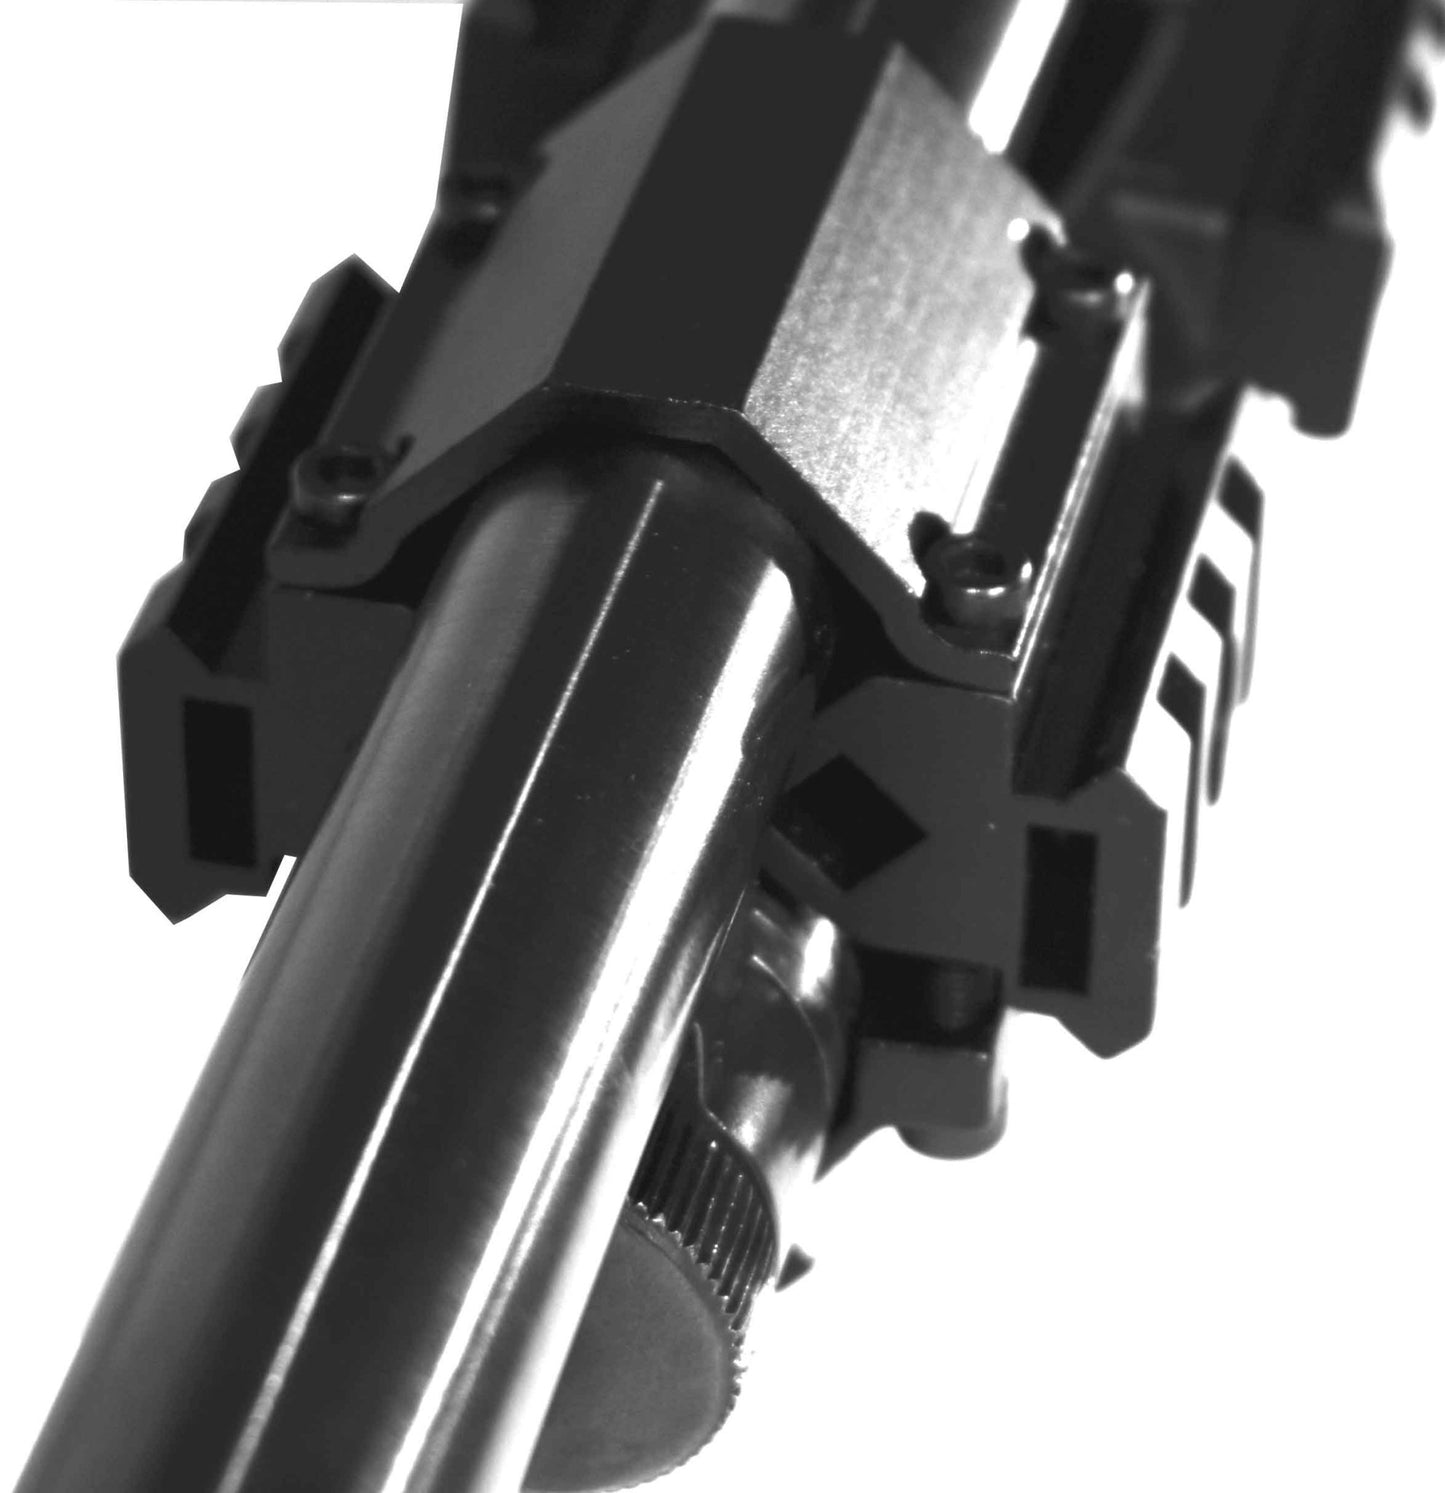 Maverick 88 12 gauge pump magazine tube mount picatinny rail. - TRINITY SUPPLY INC